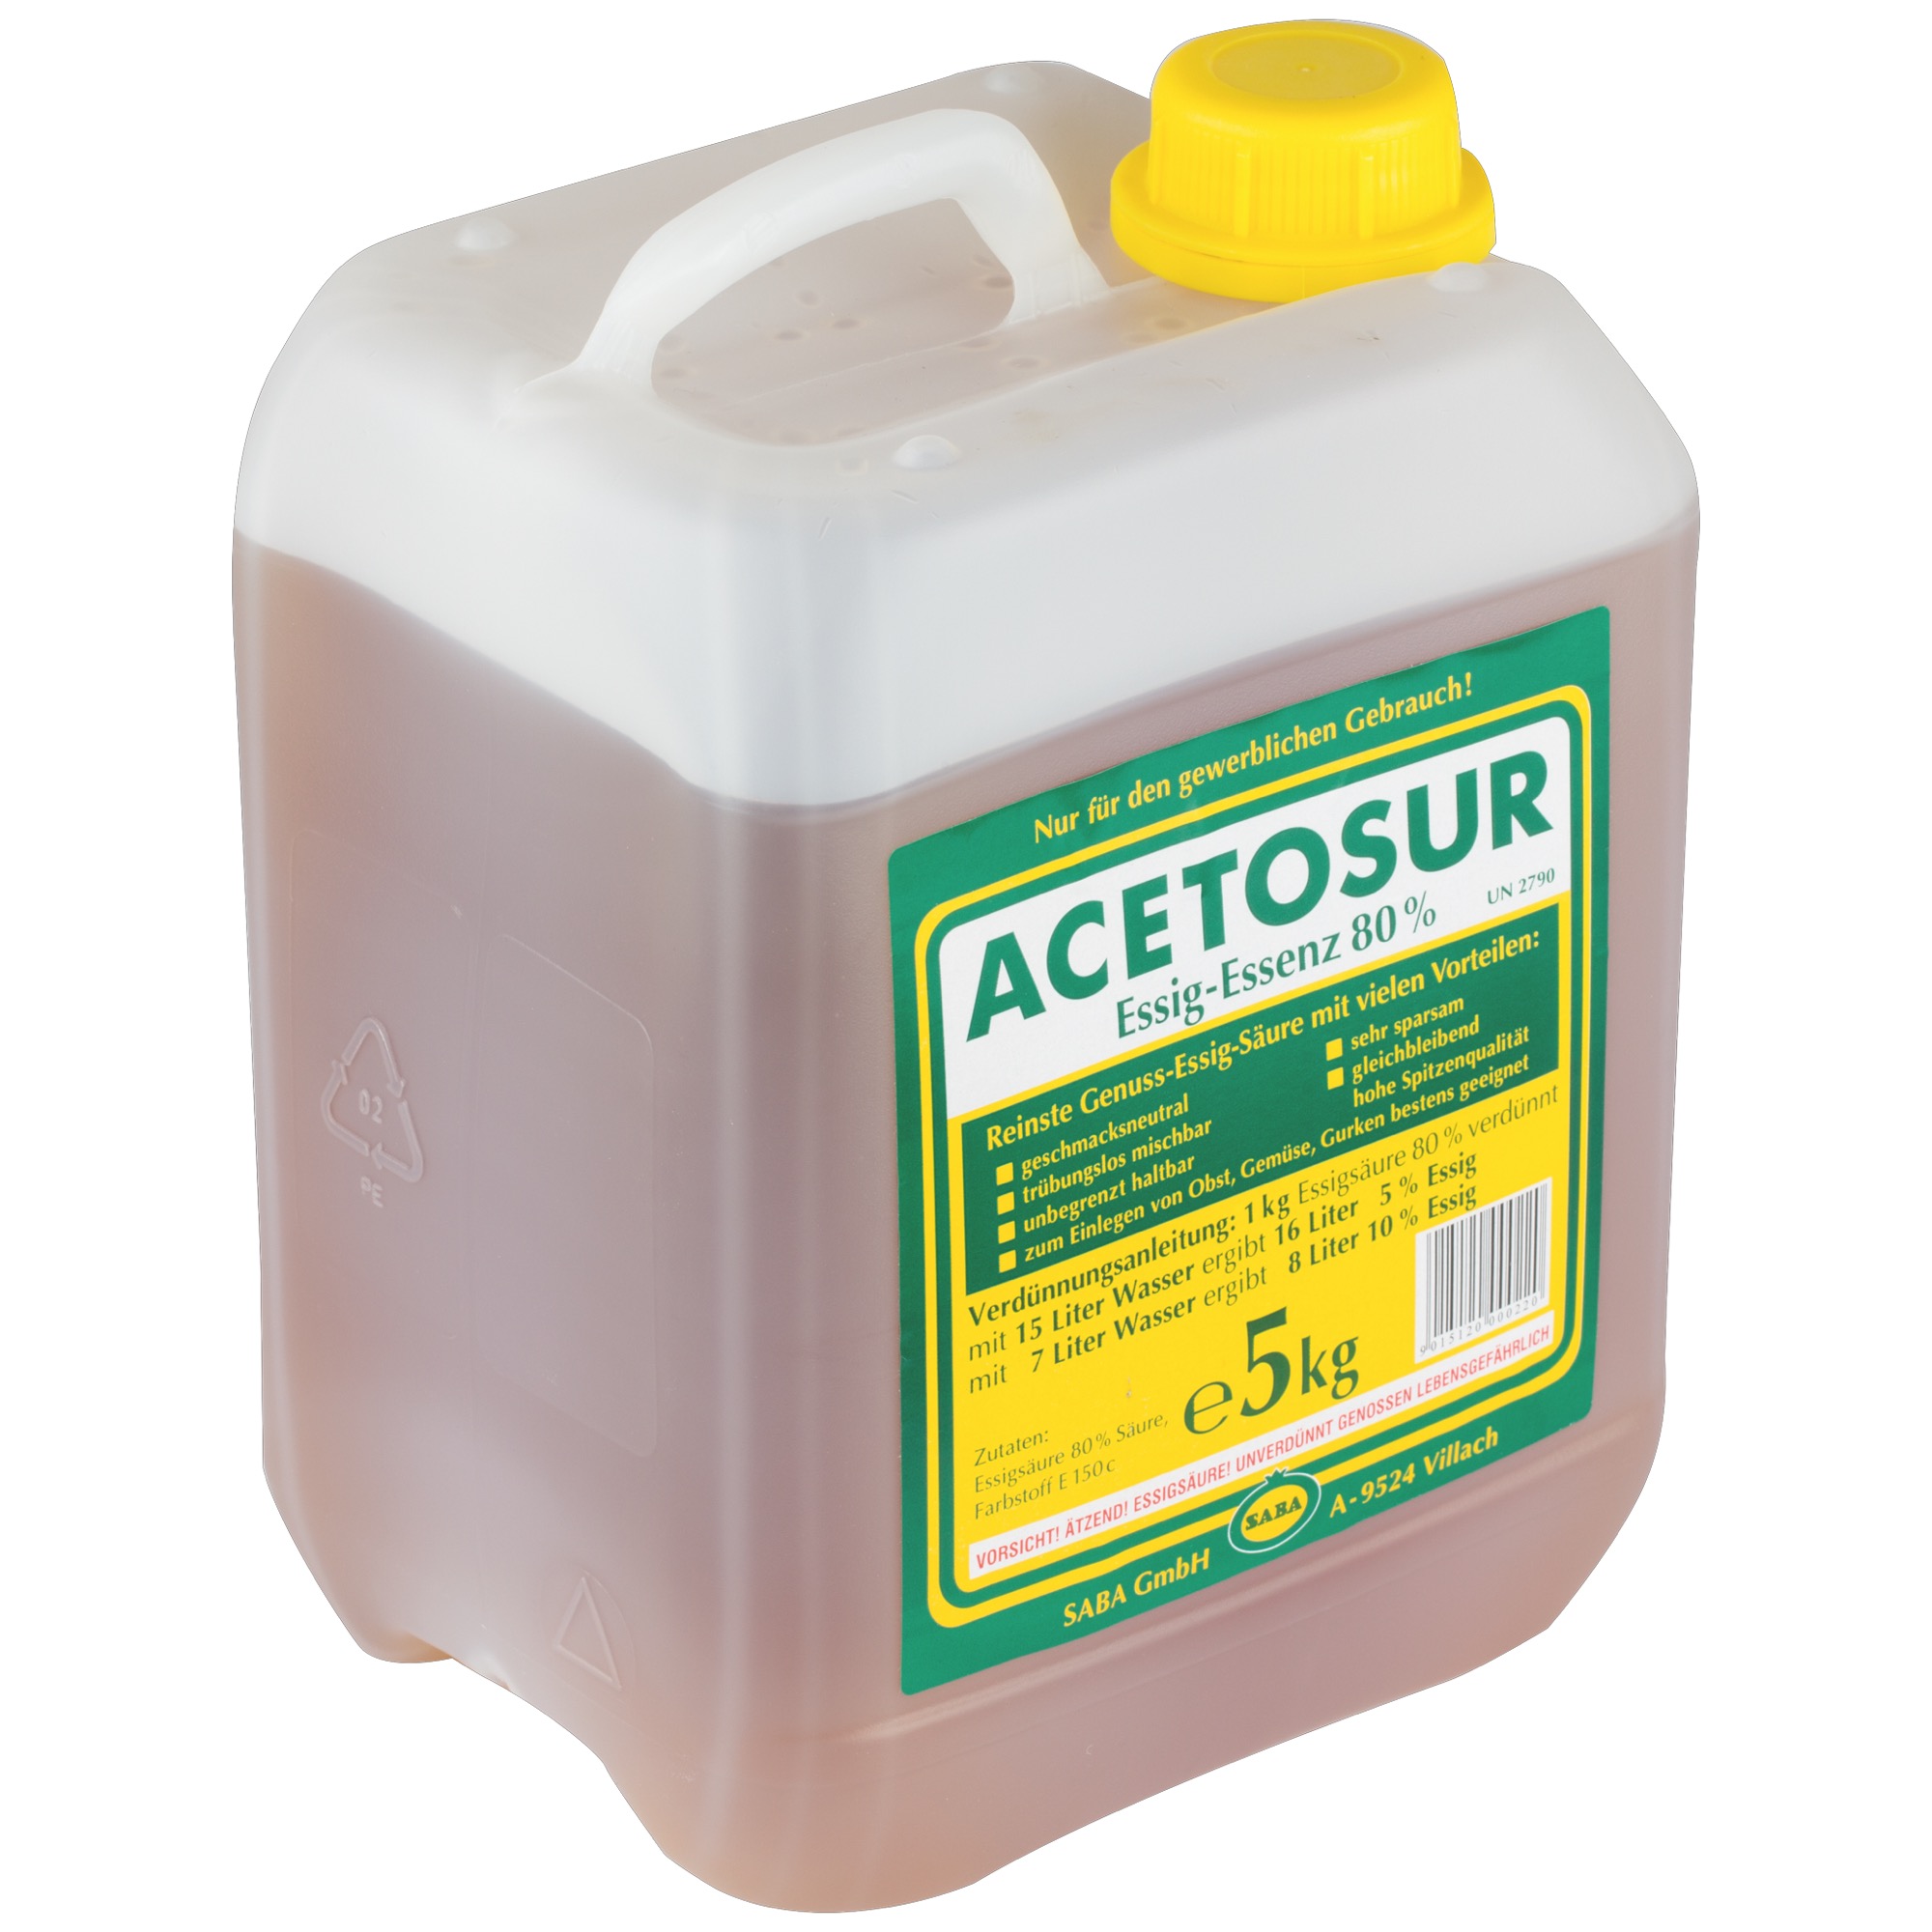 Acetosur octová esencia 80% tmavá 5kg